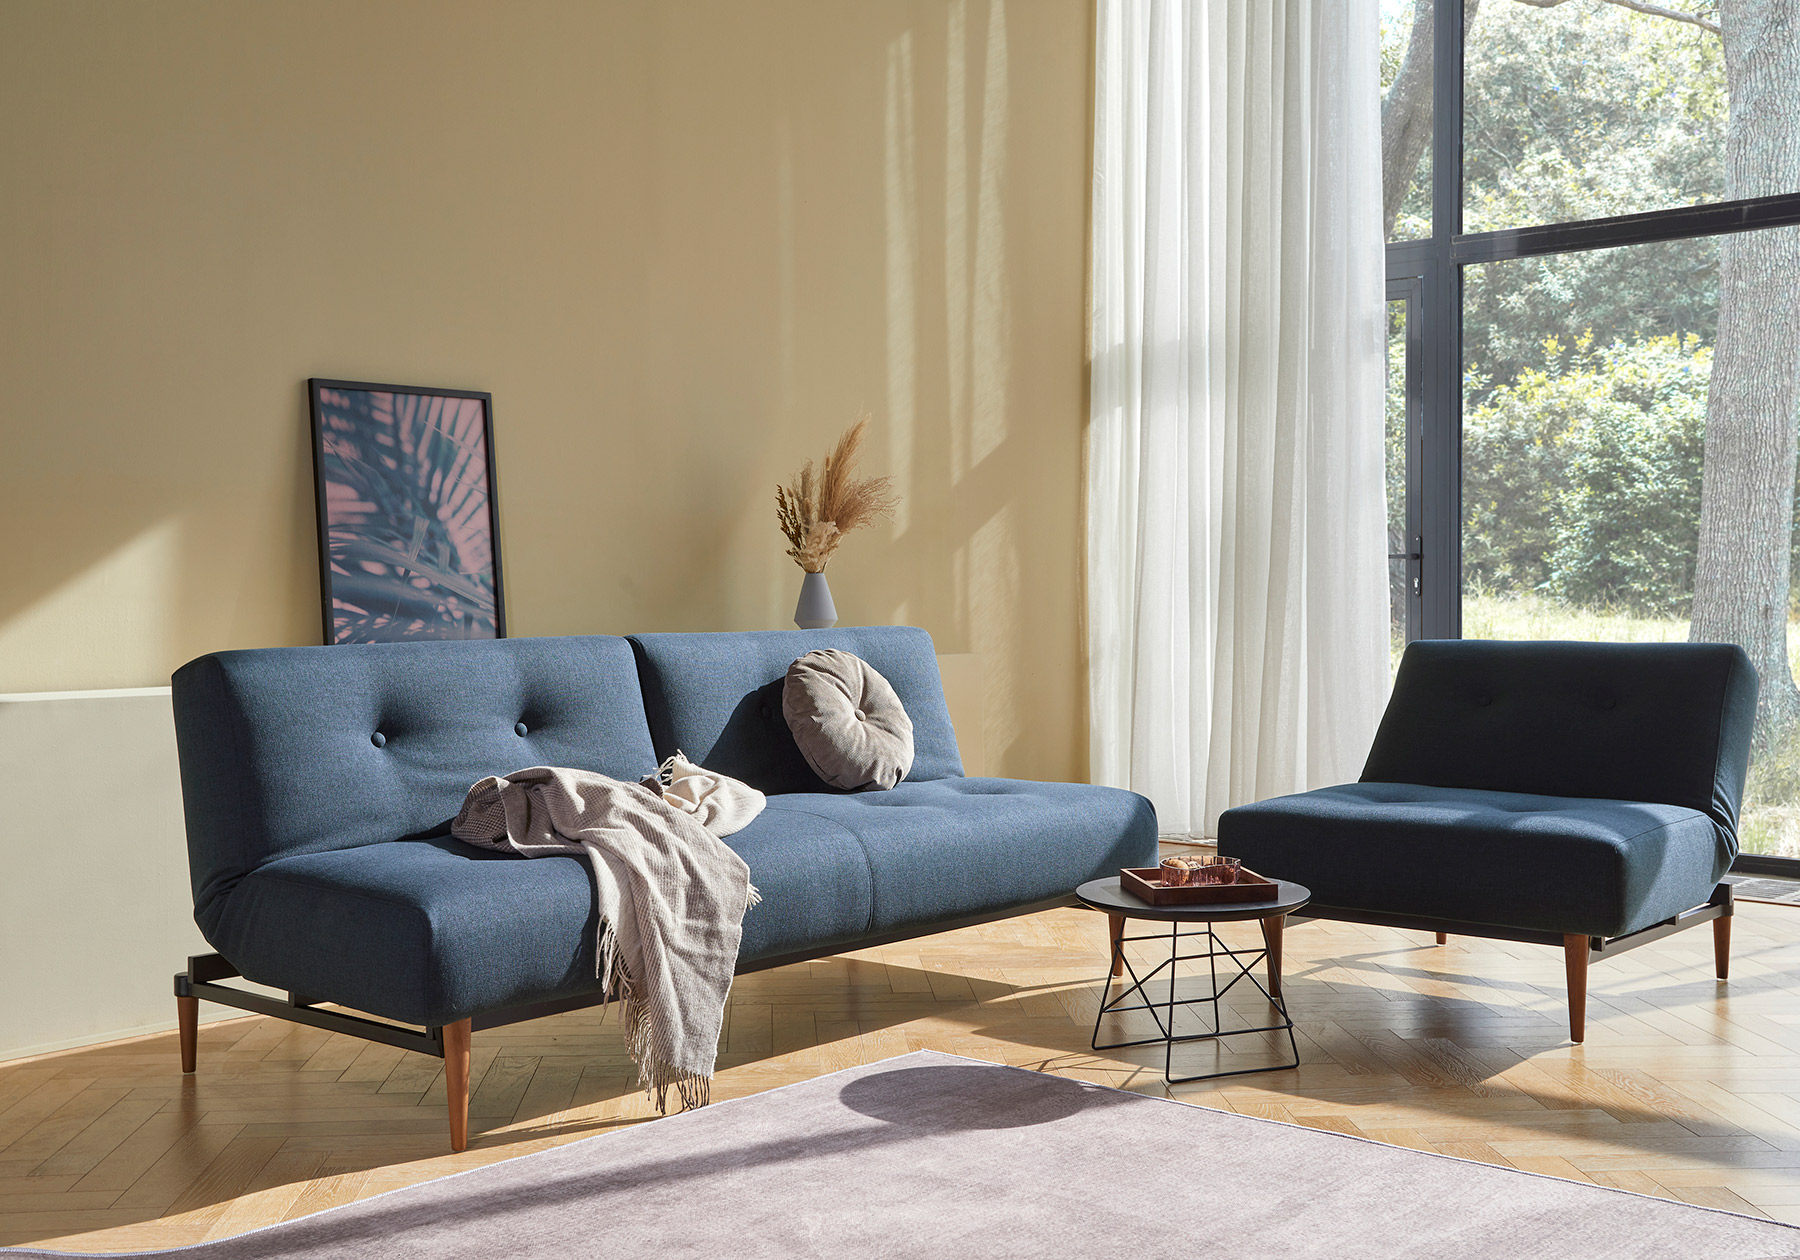 century furniture sofa beds